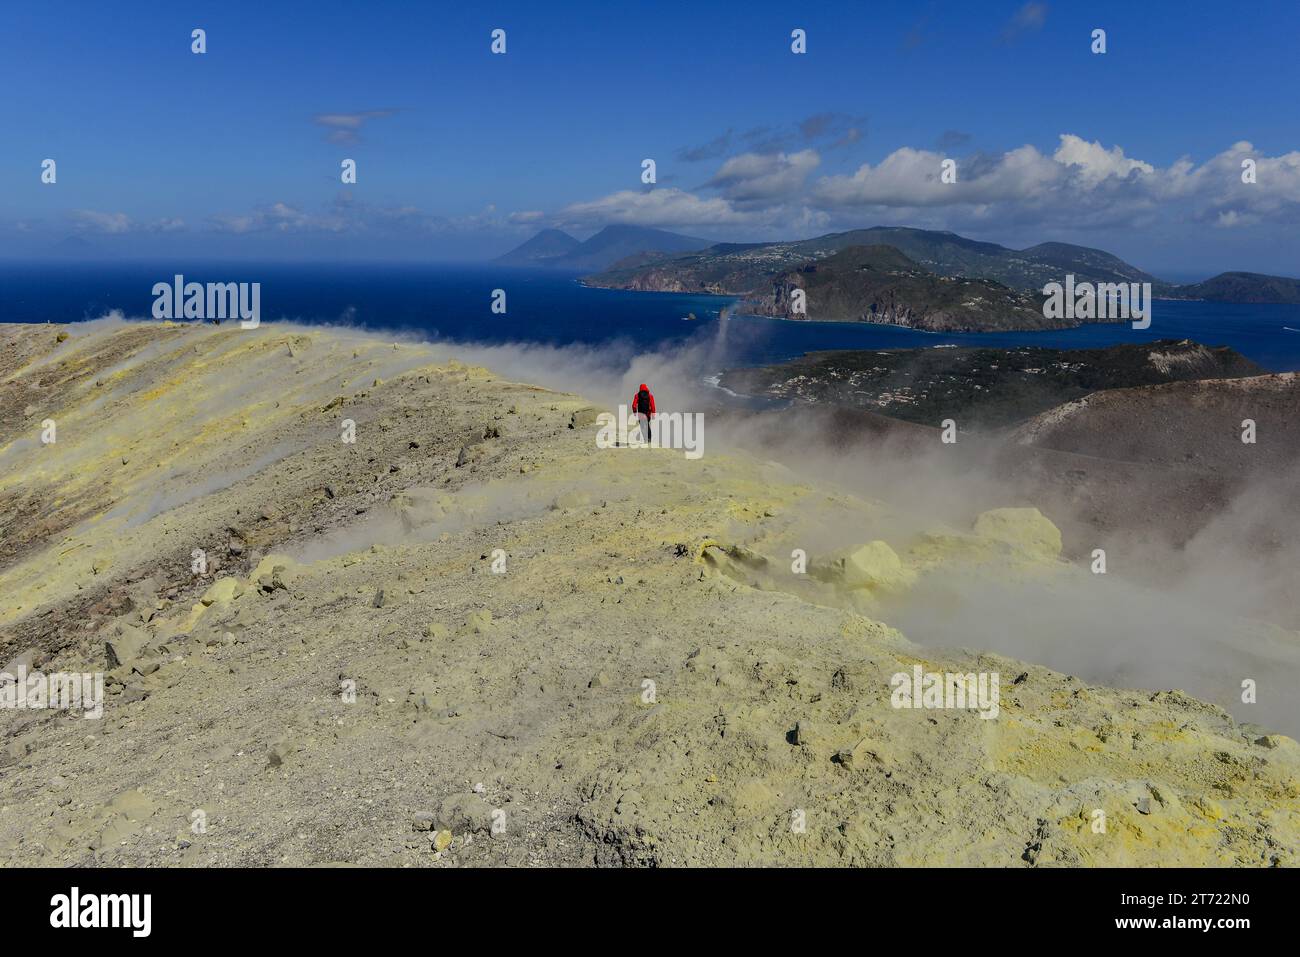 Trekking in Rot inmitten schwefelhaltiger vulkanischer Gase, die aus gelben Fumarolen um den riesigen Krater Vulcano, Äolische Inseln, Italien, austreten Stockfoto